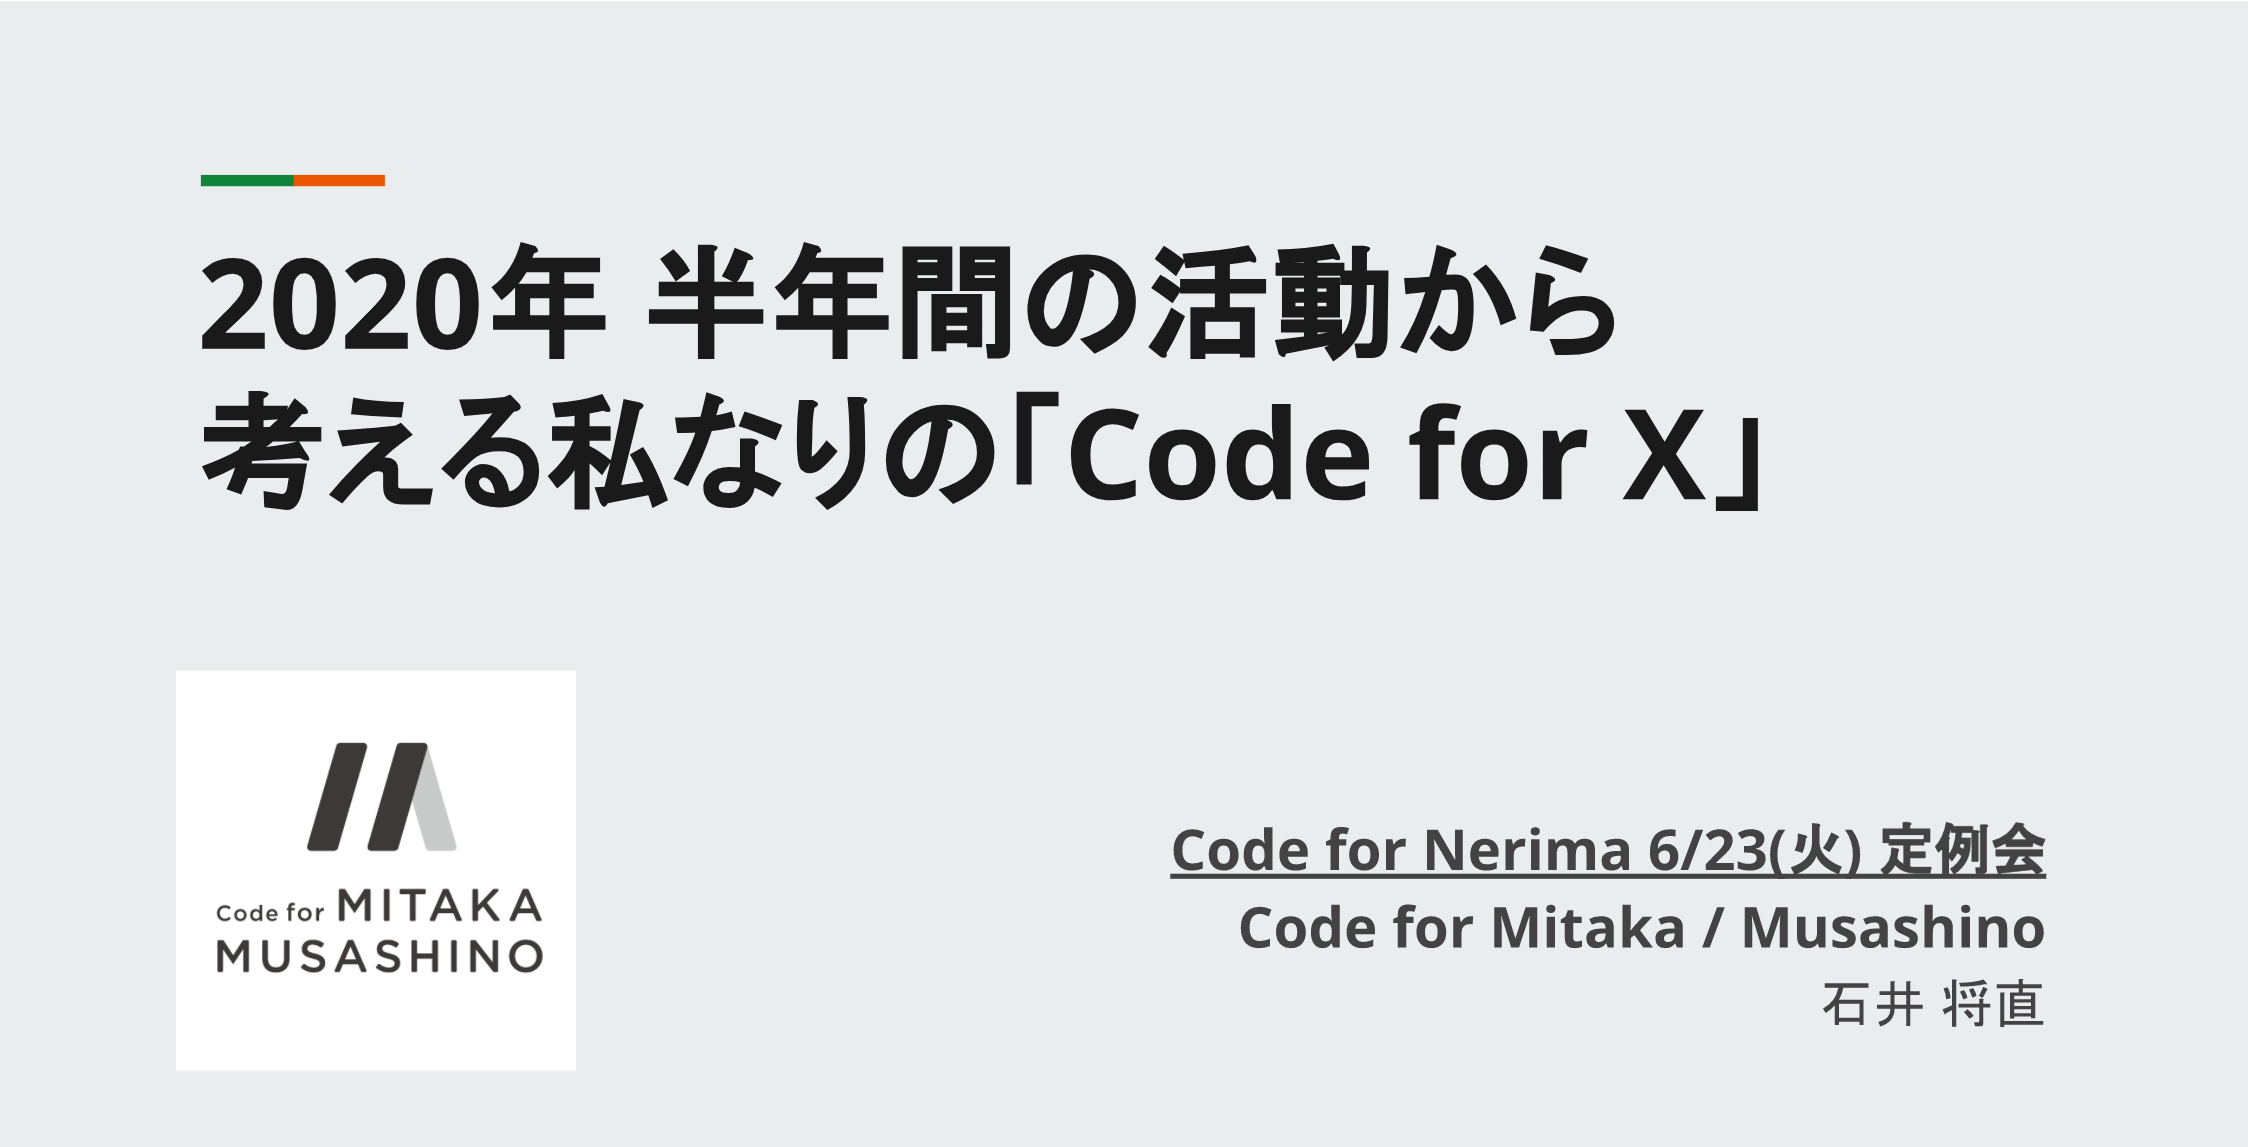 Code for Nerimaの6月定例会に参加し、半年間の活動について発表をしました